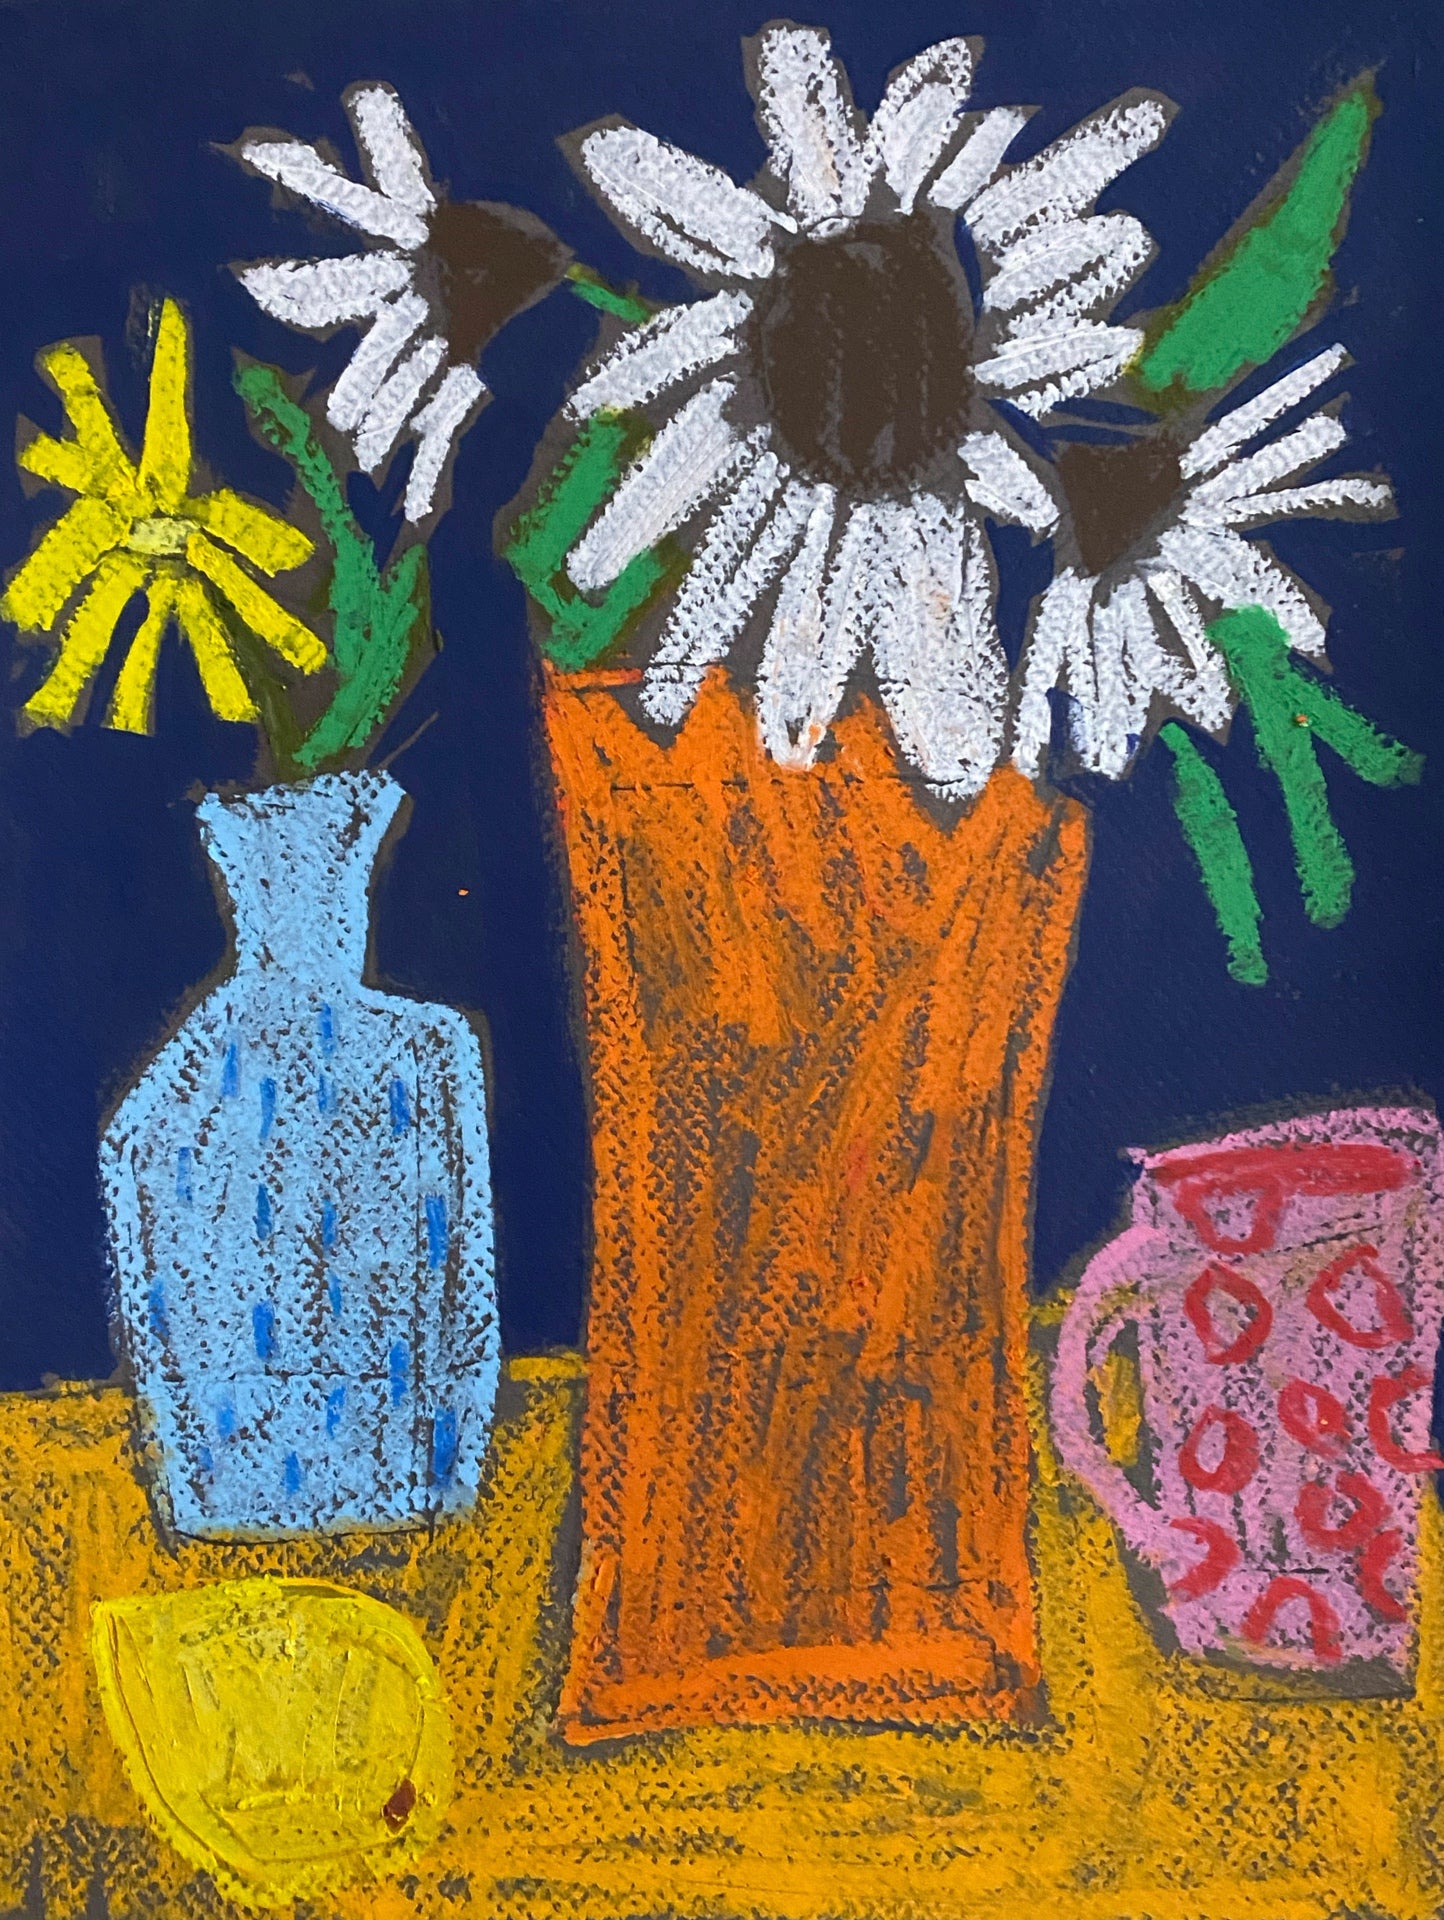 White Sunflowers and Lemon / 9”x12”  original art on paper